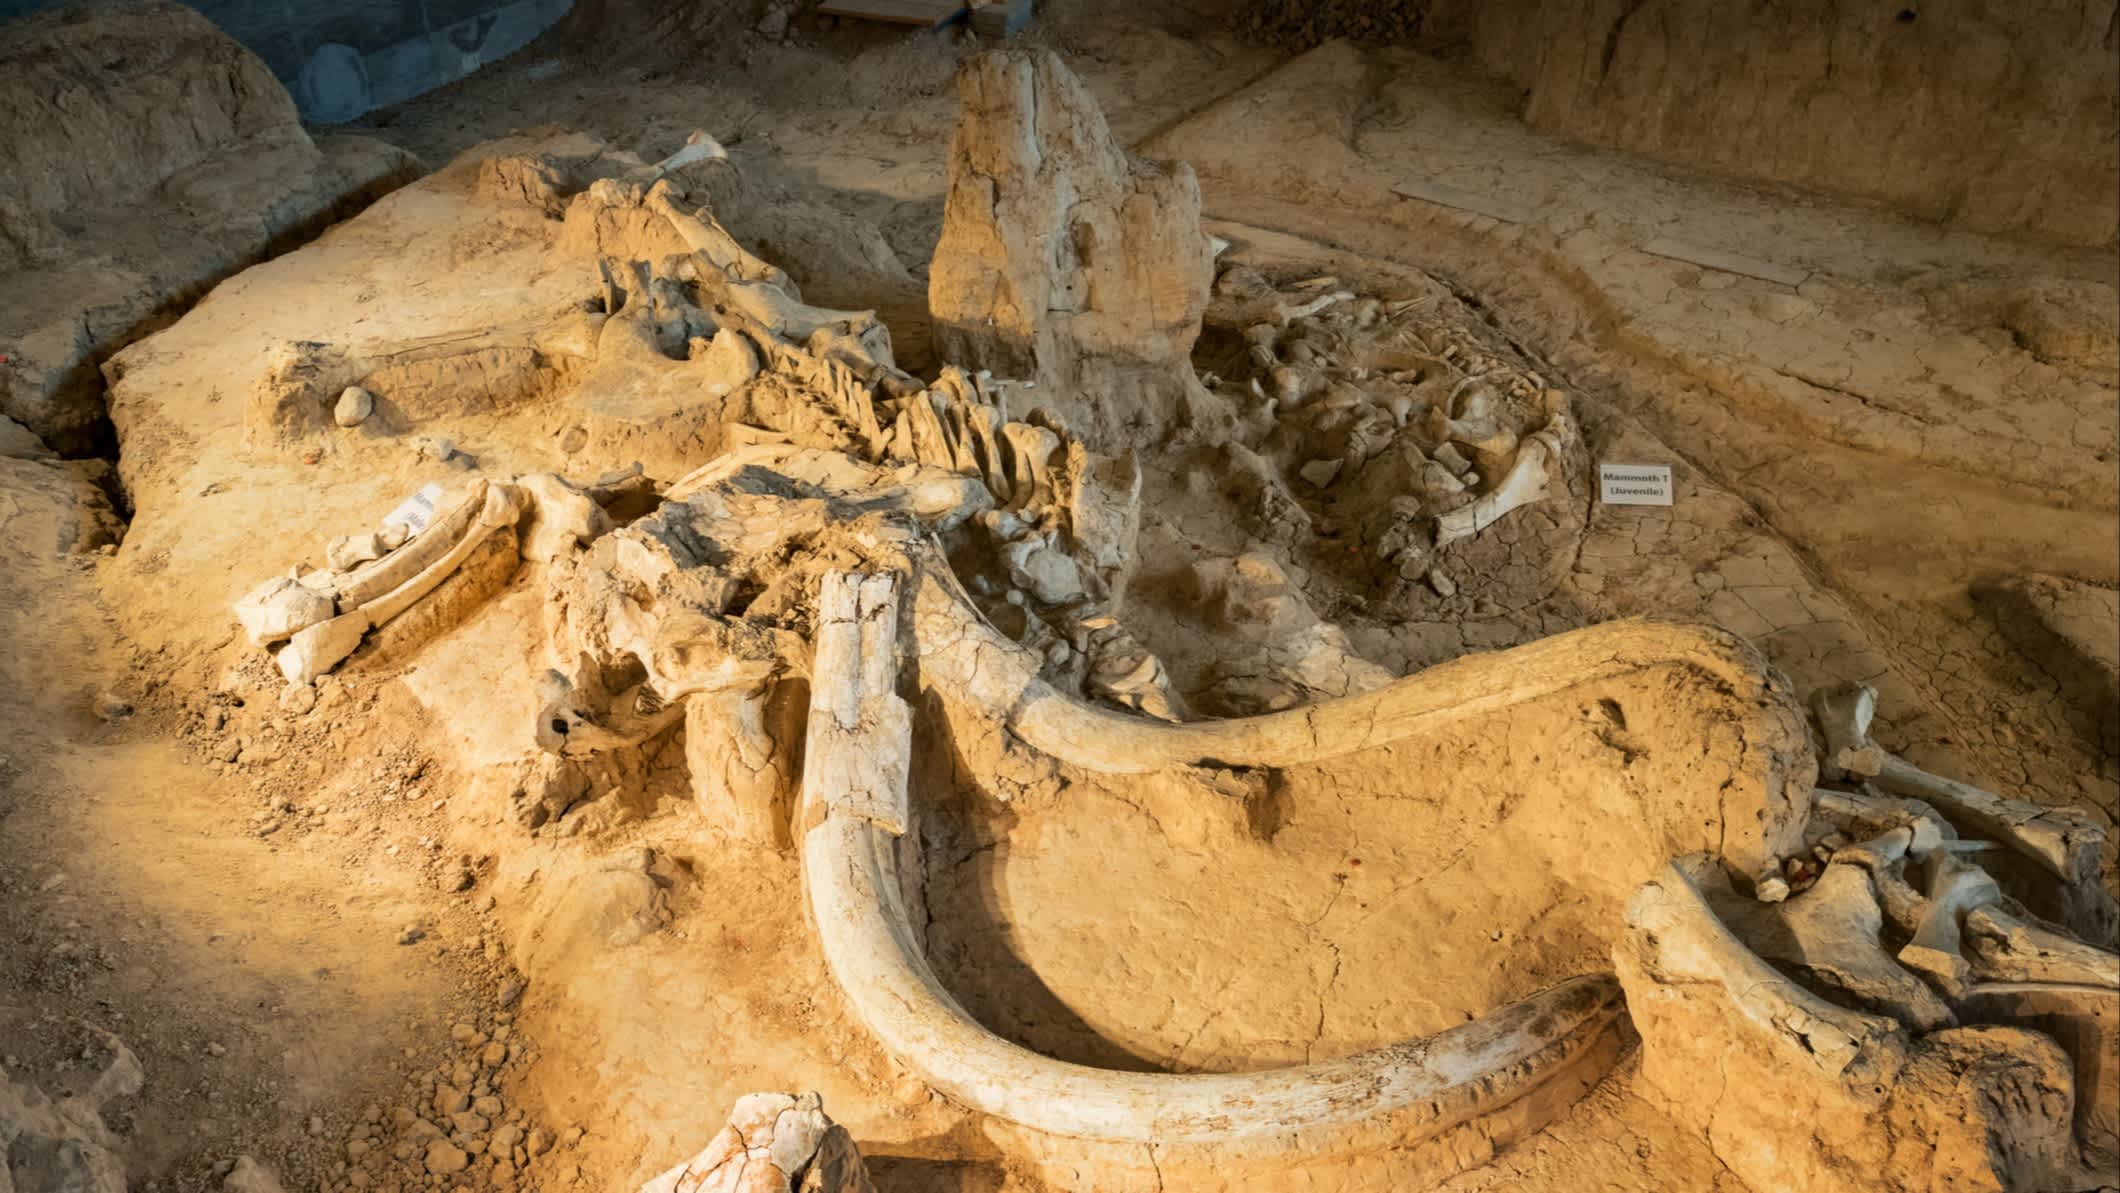 Un fossile de mammouth au Monument national du Mammouth de Waco au Texas, USA.